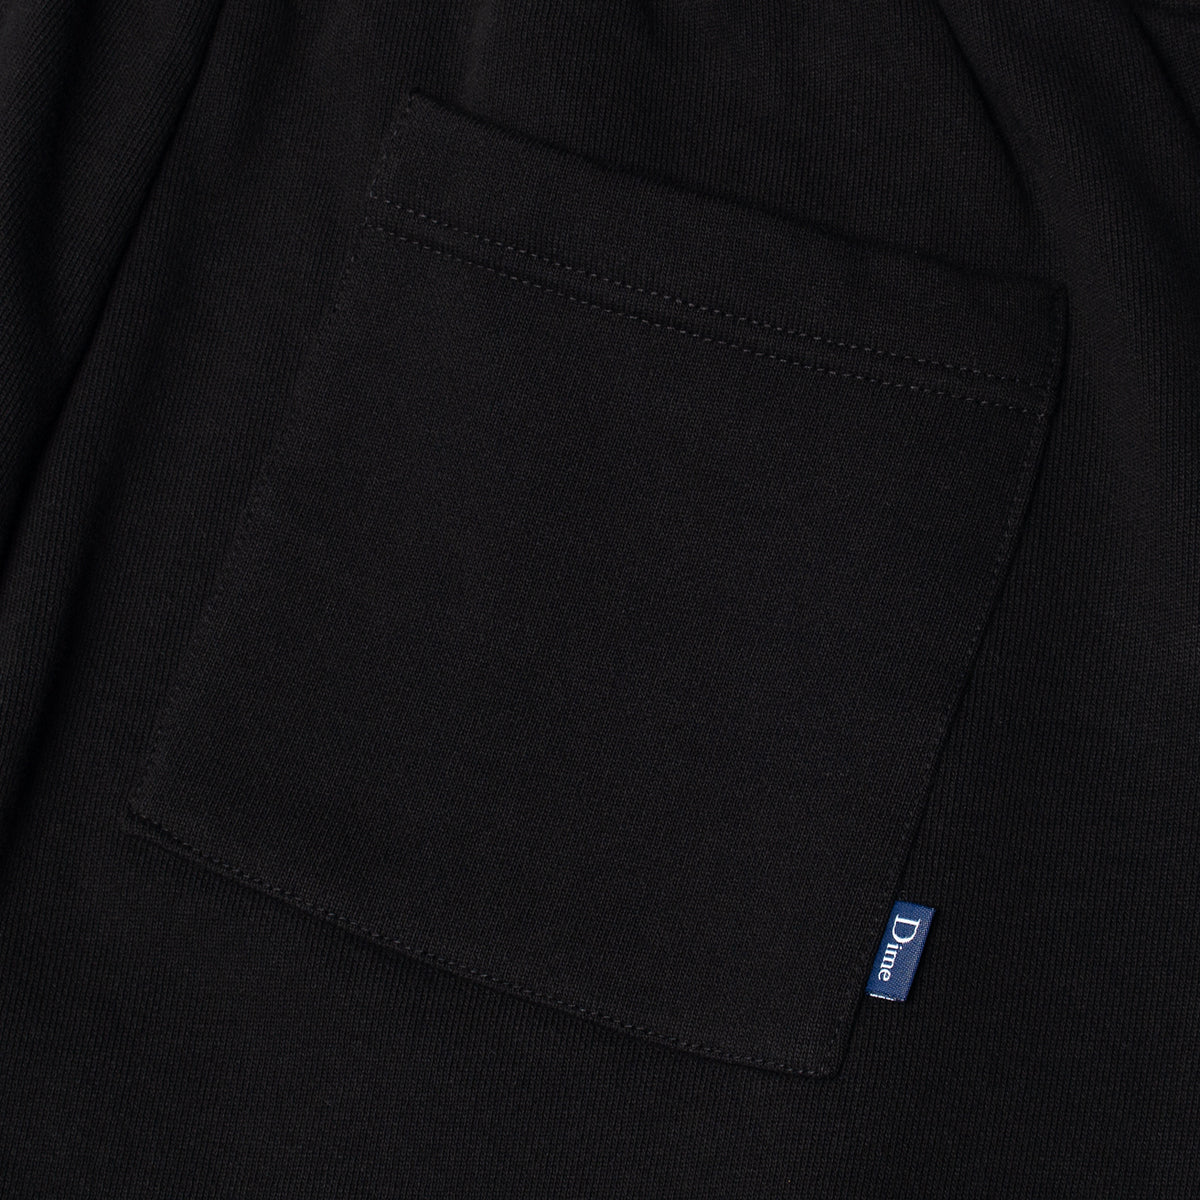 Dime | Classic Small Logo Sweatpants Color : Black